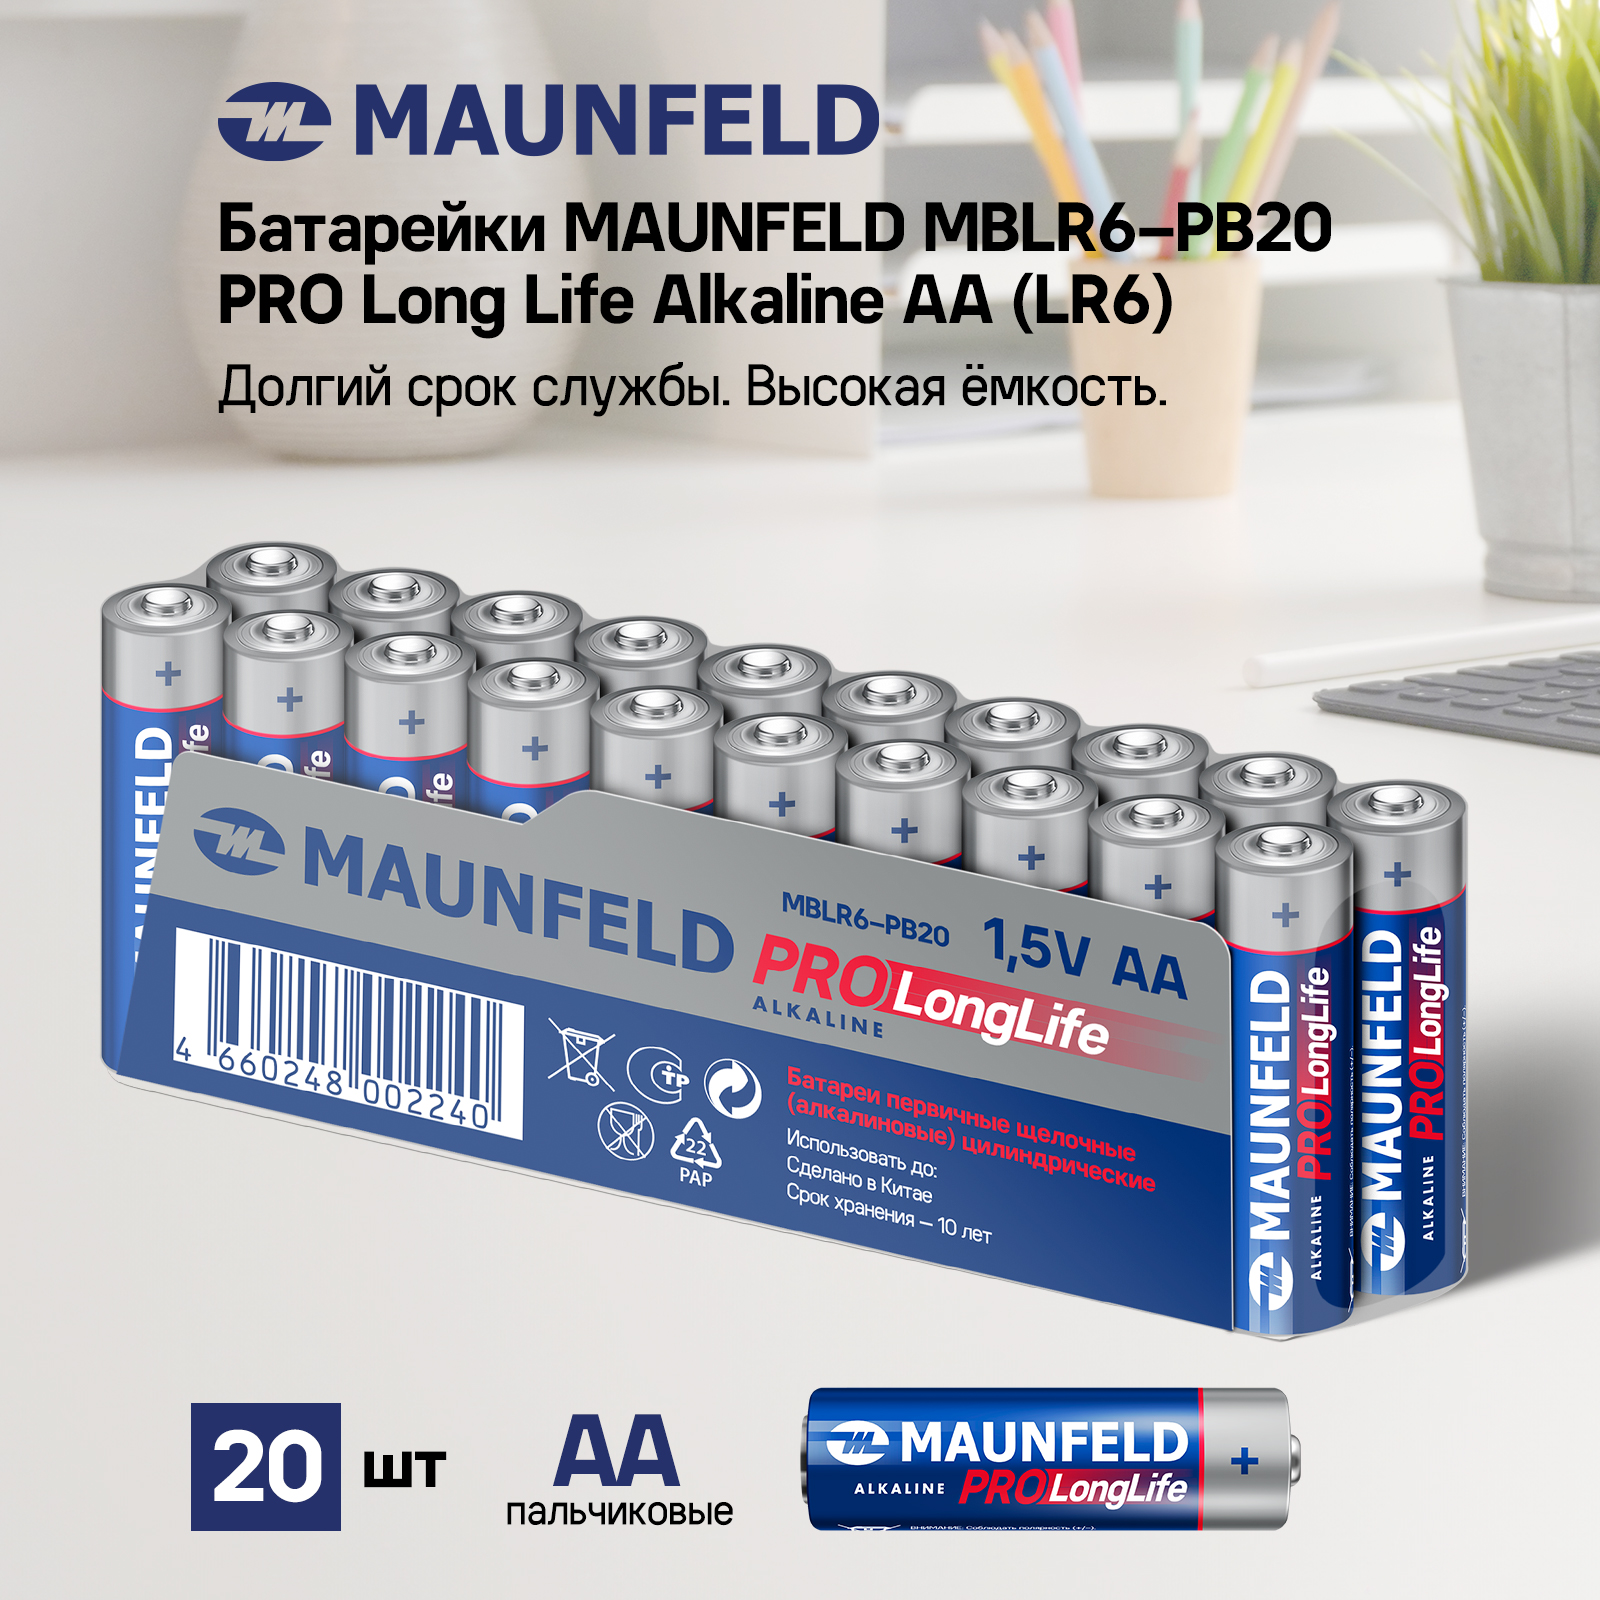 Батарейки MAUNFELD PRO Long Life Alkaline AA (LR6) MBLR6-PB20, спайка 20 шт. - купить в Москве, цены на Мегамаркет | 600013574834